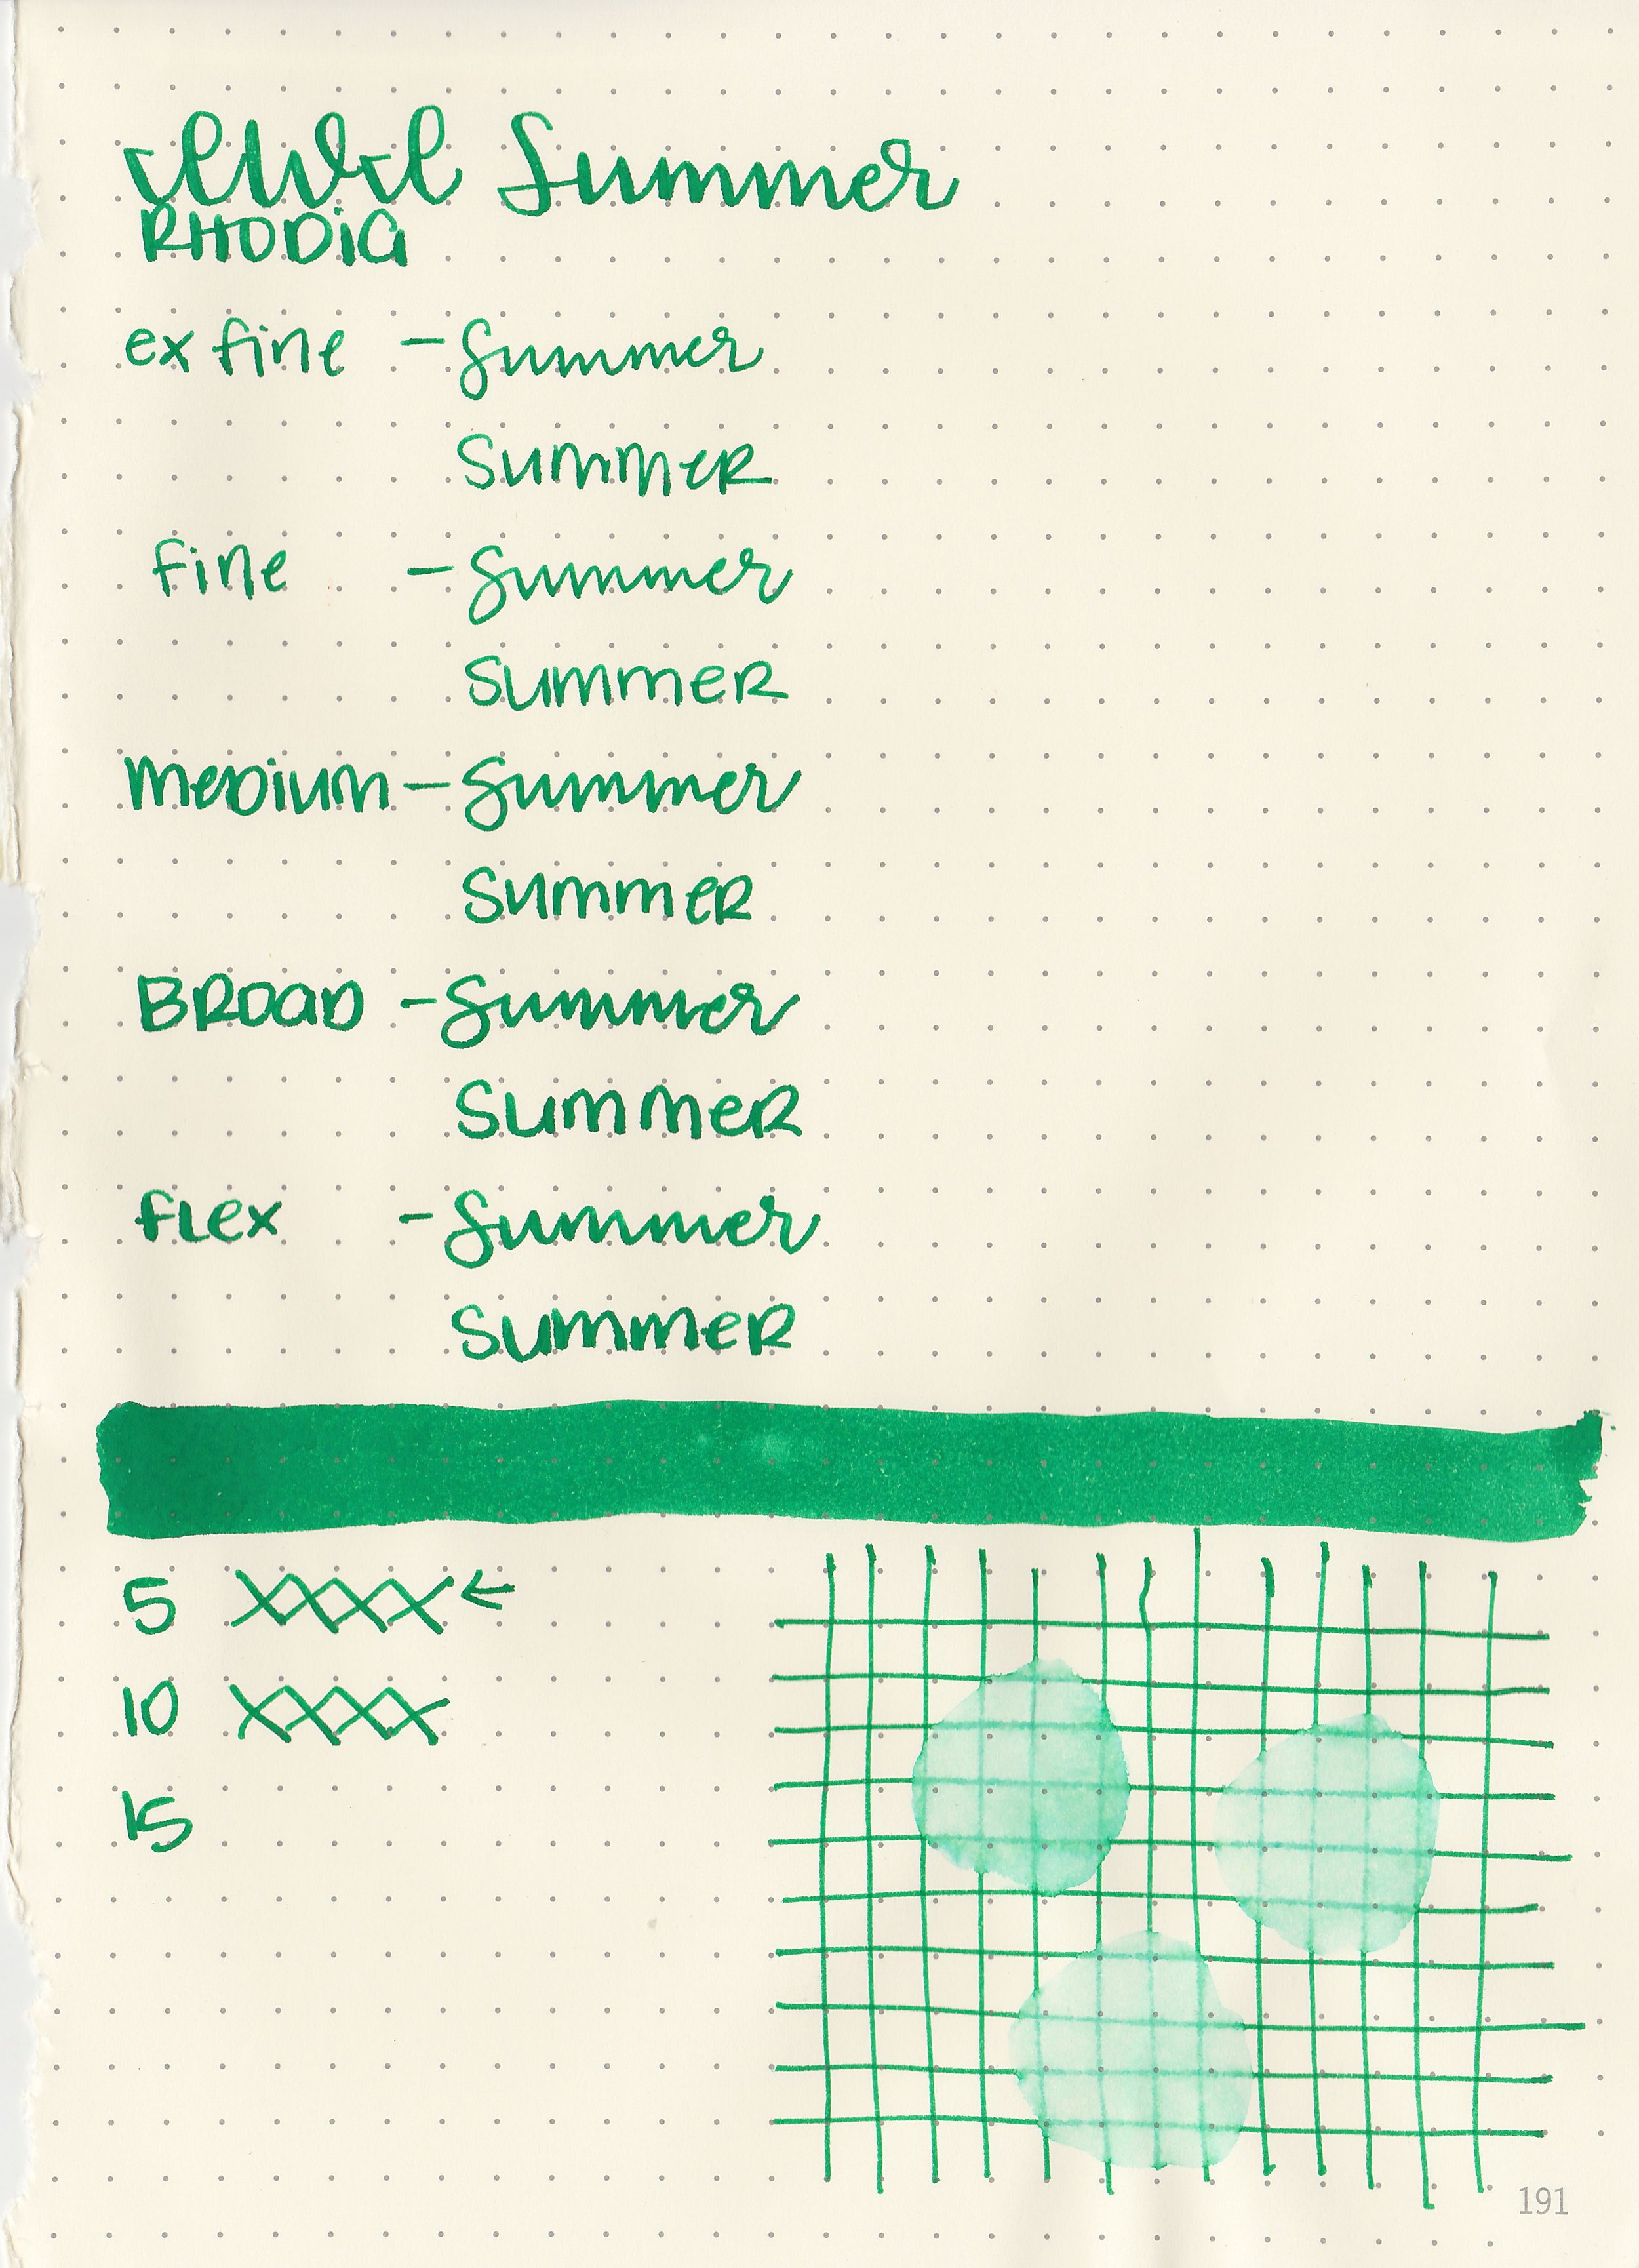 iwi-beginning-of-summer-5.jpg